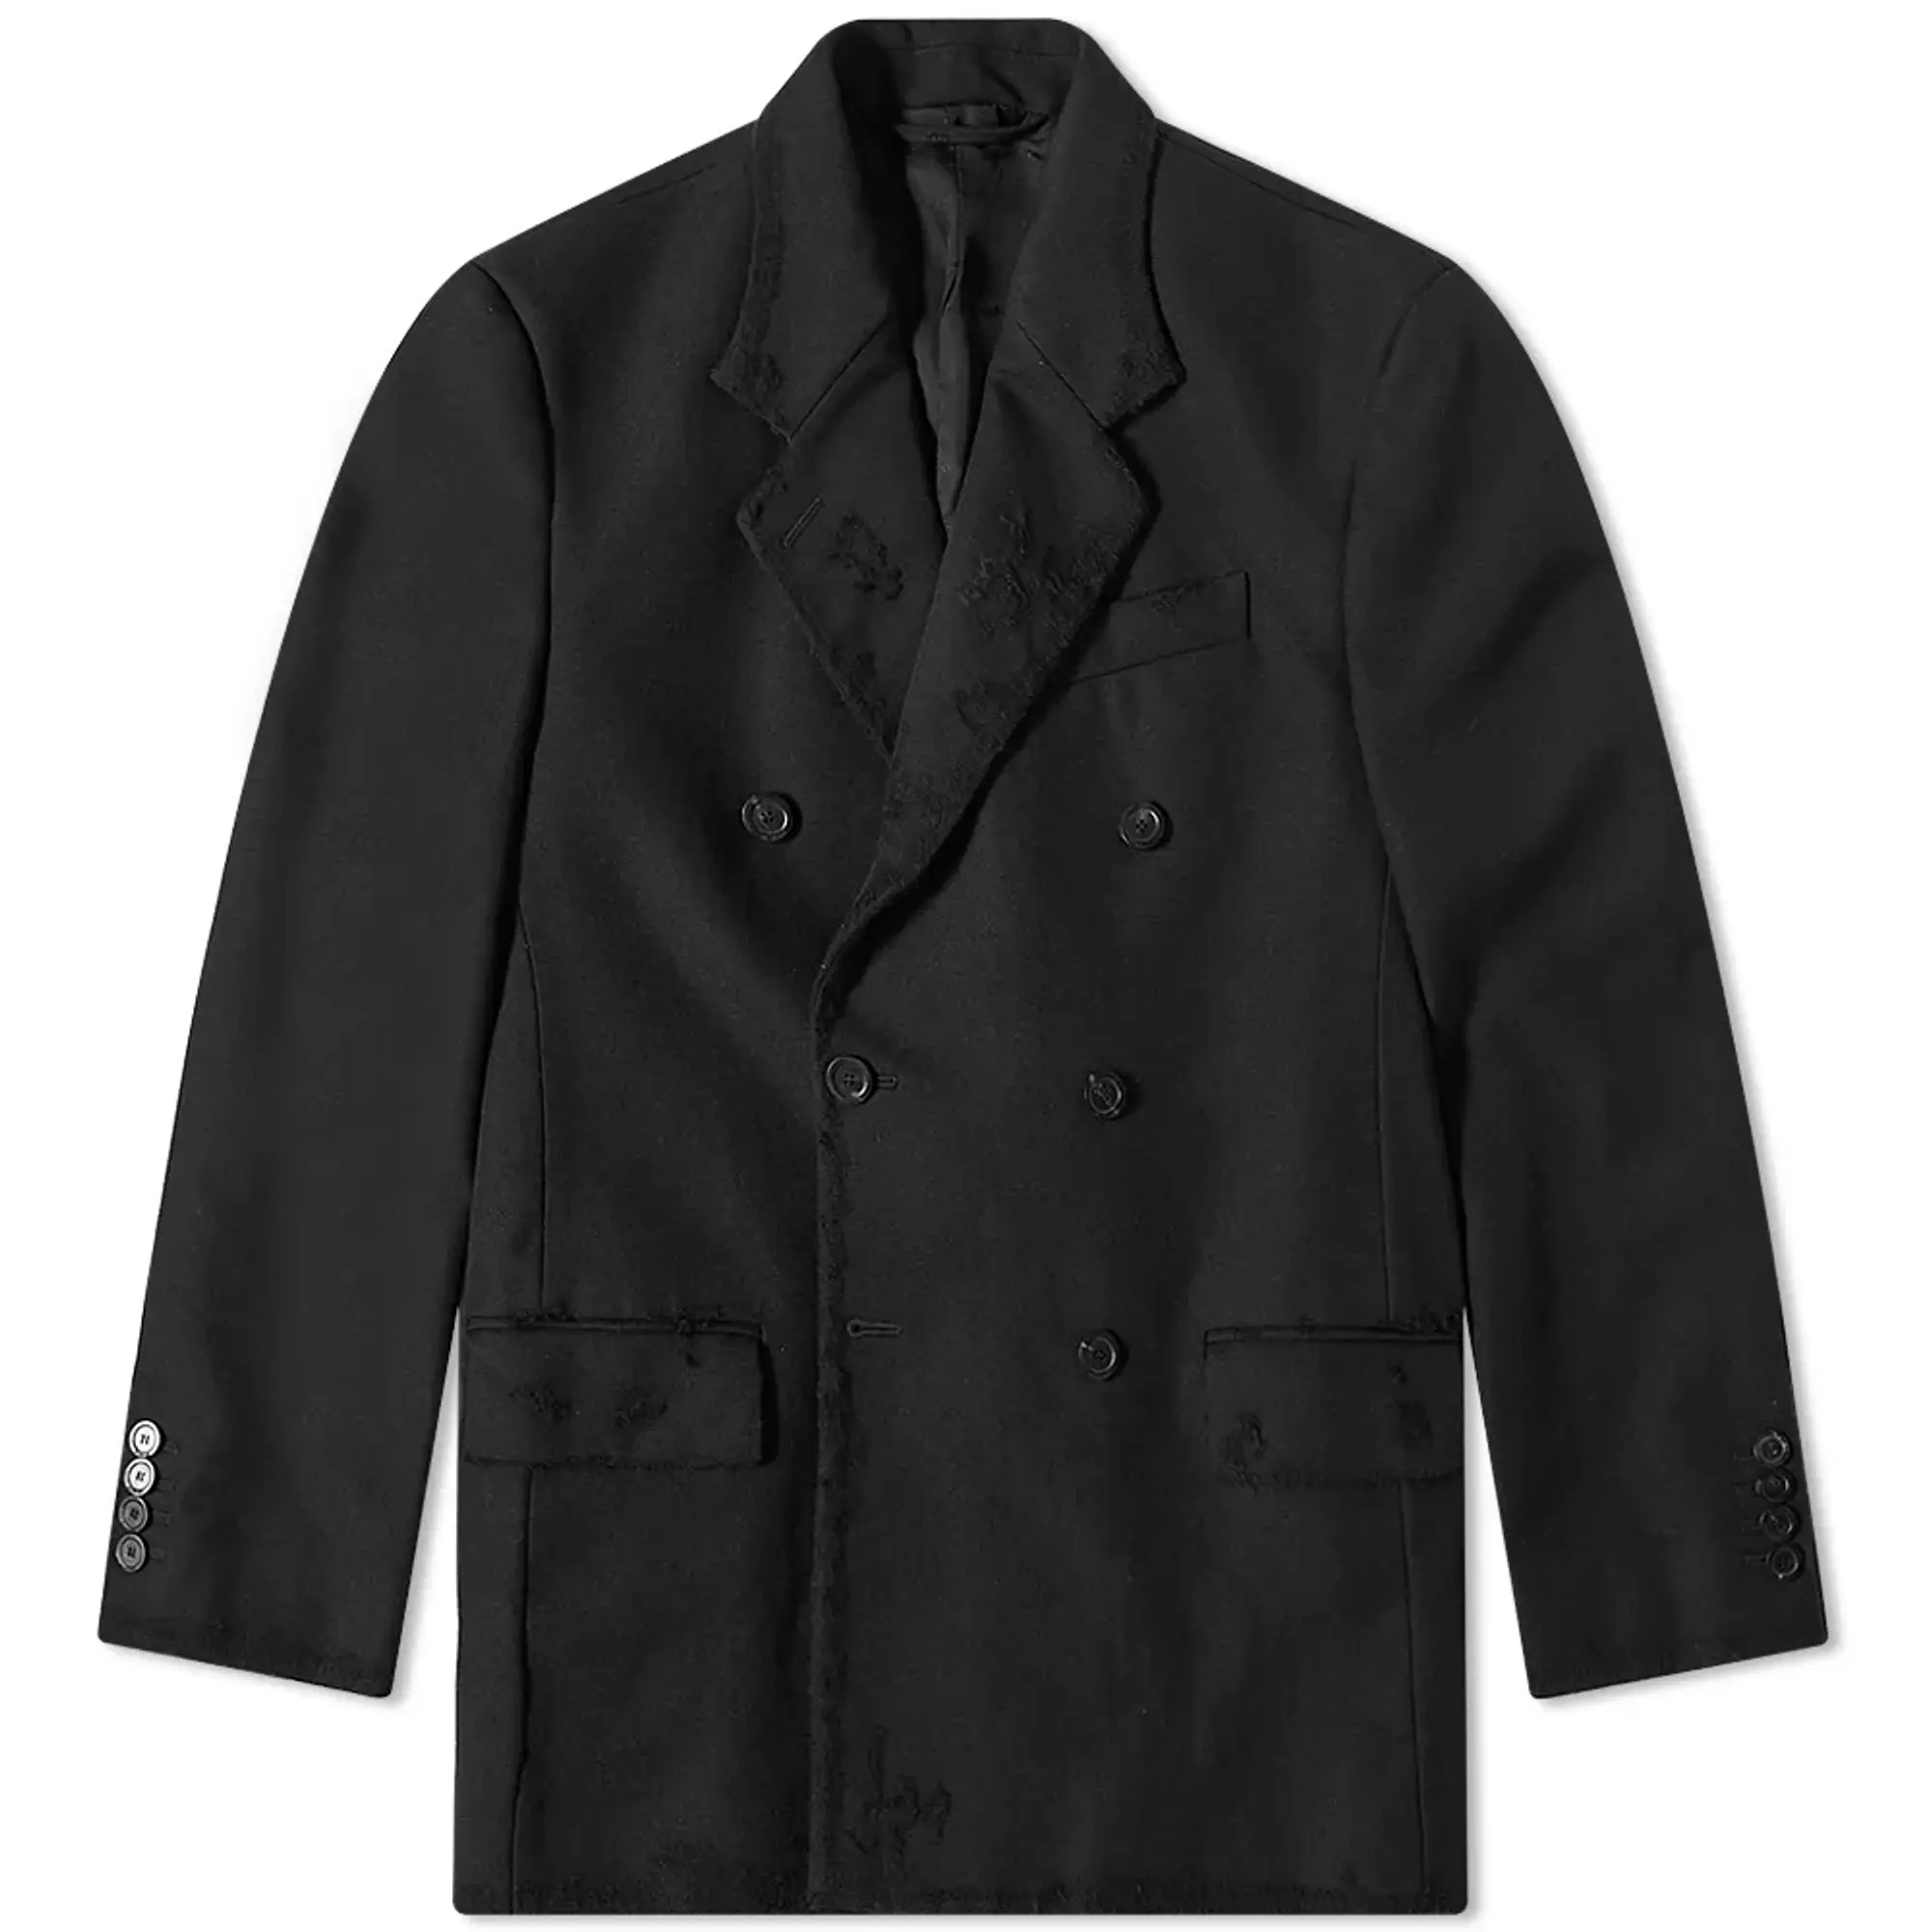 Balenciaga Men's Shrunk Suit Jacket Black